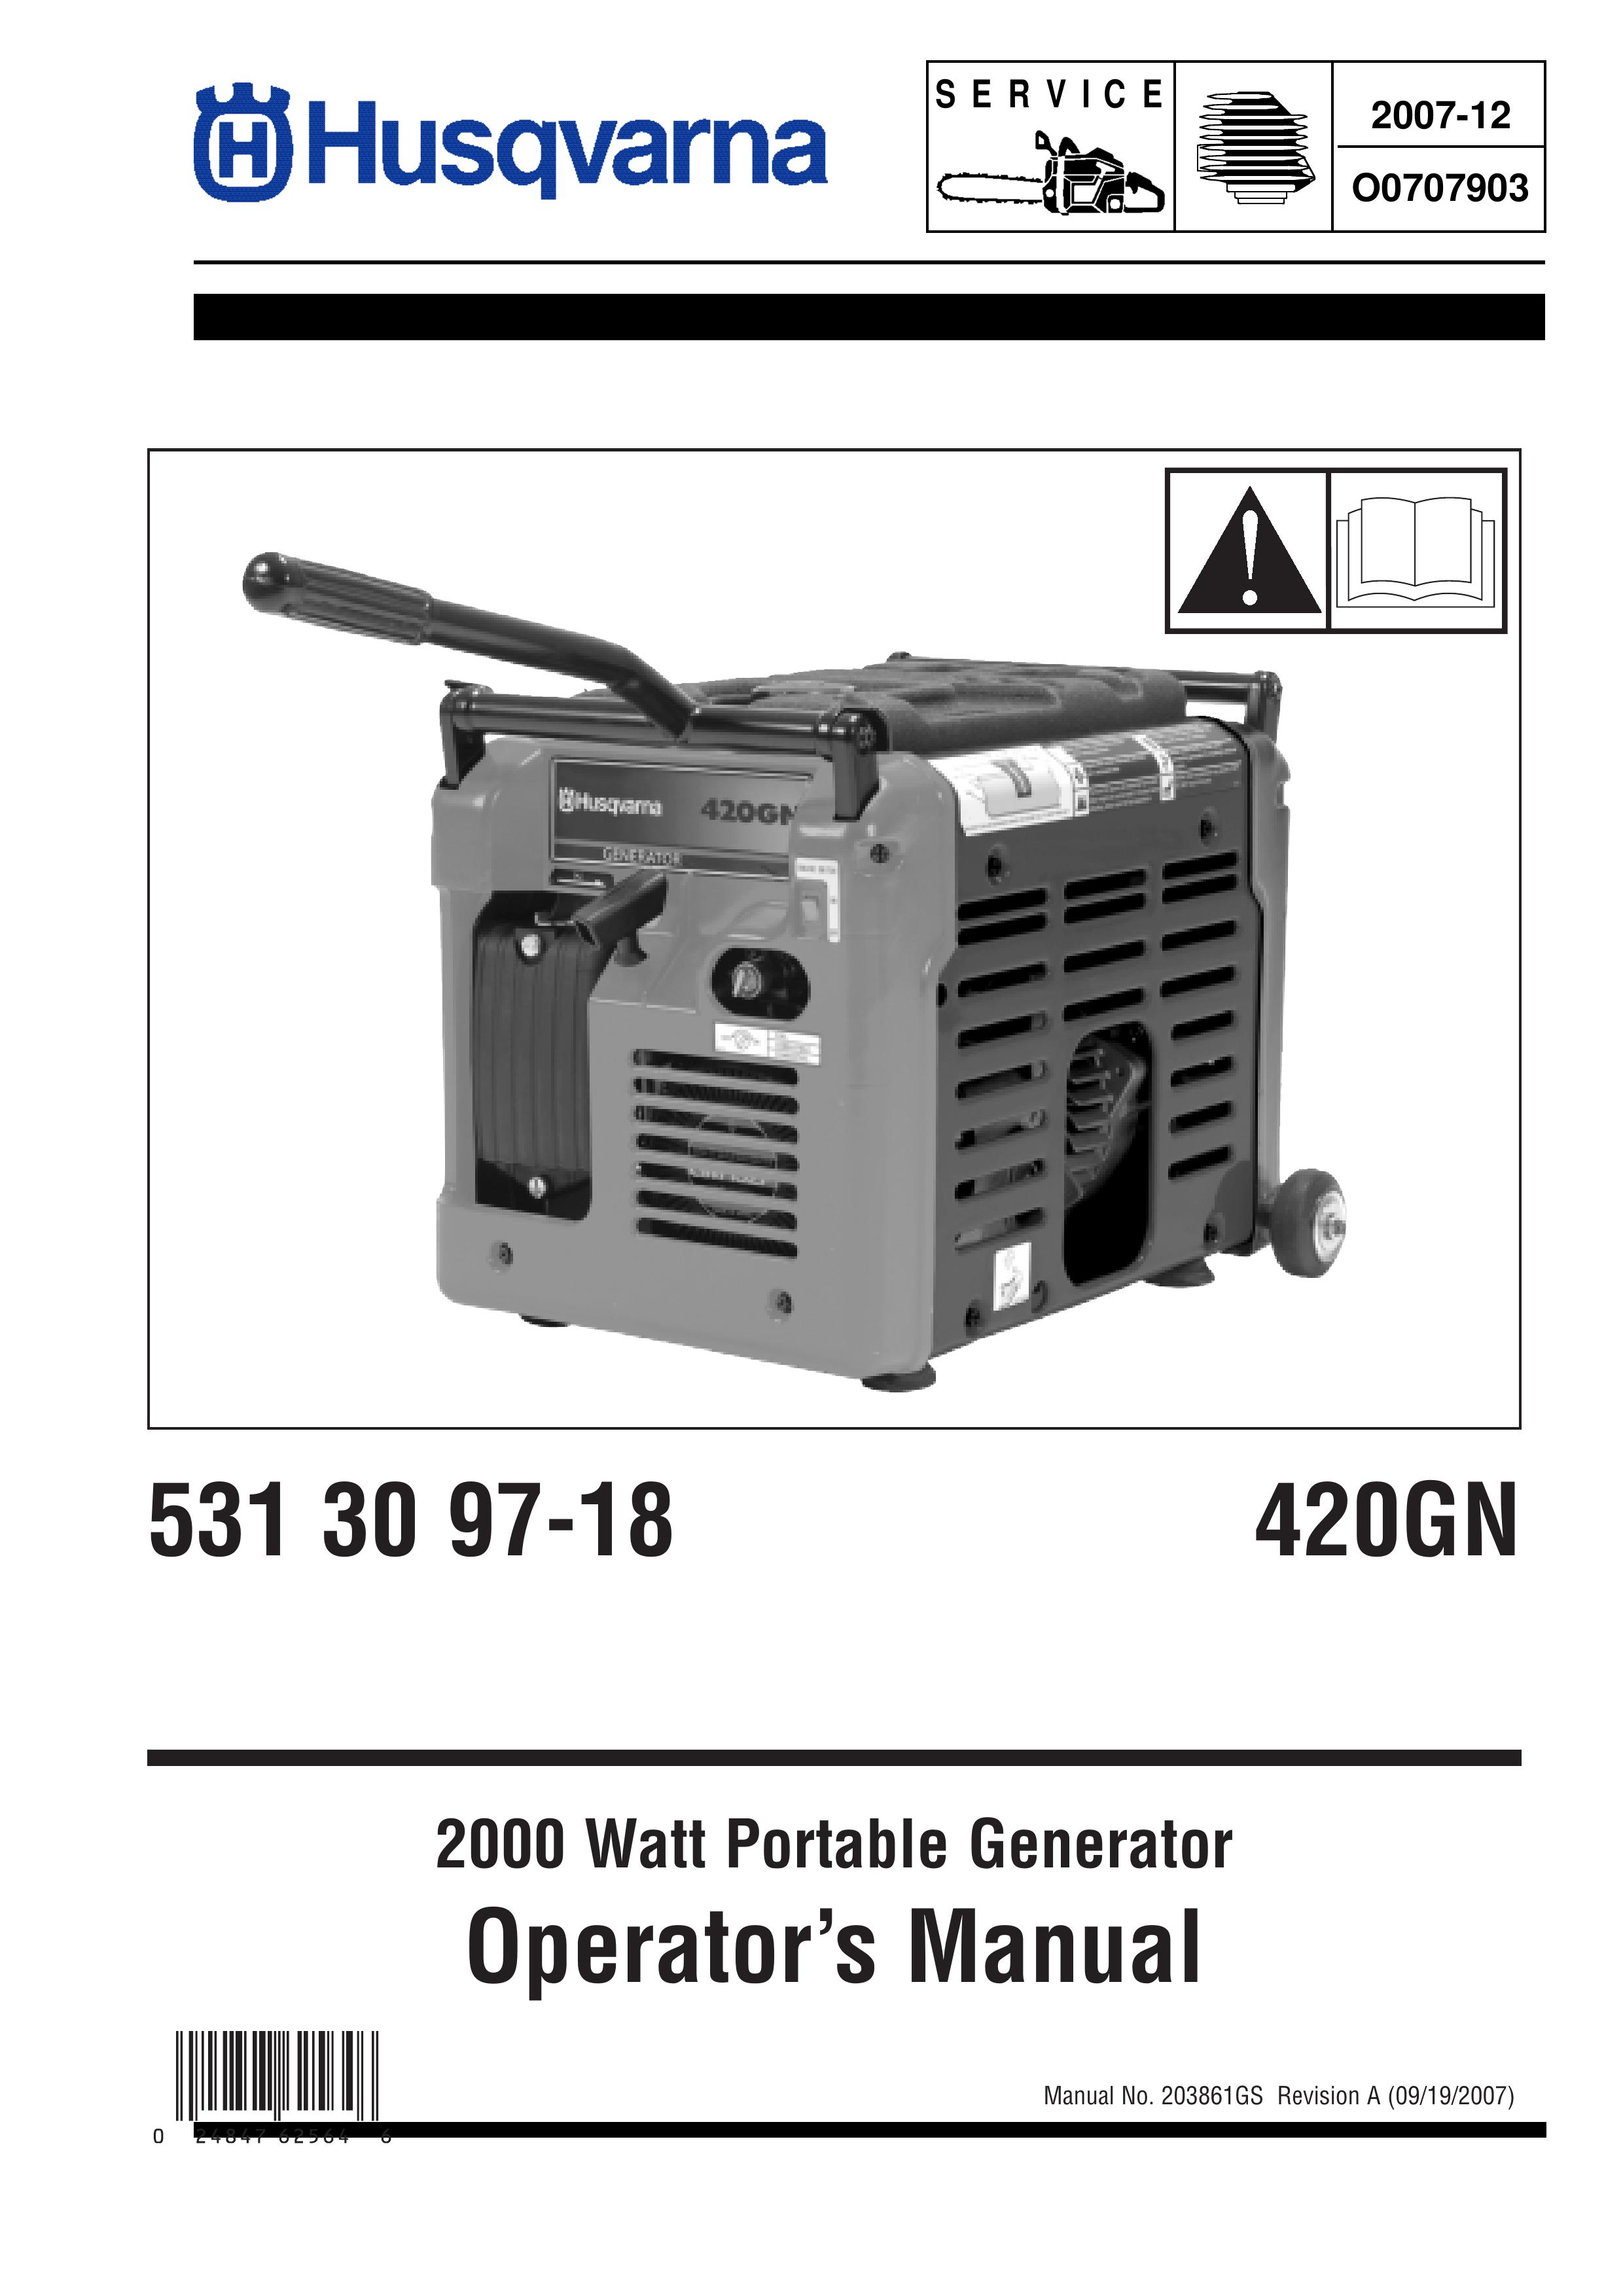 Husqvarna 420 GN Portable Generator User Manual